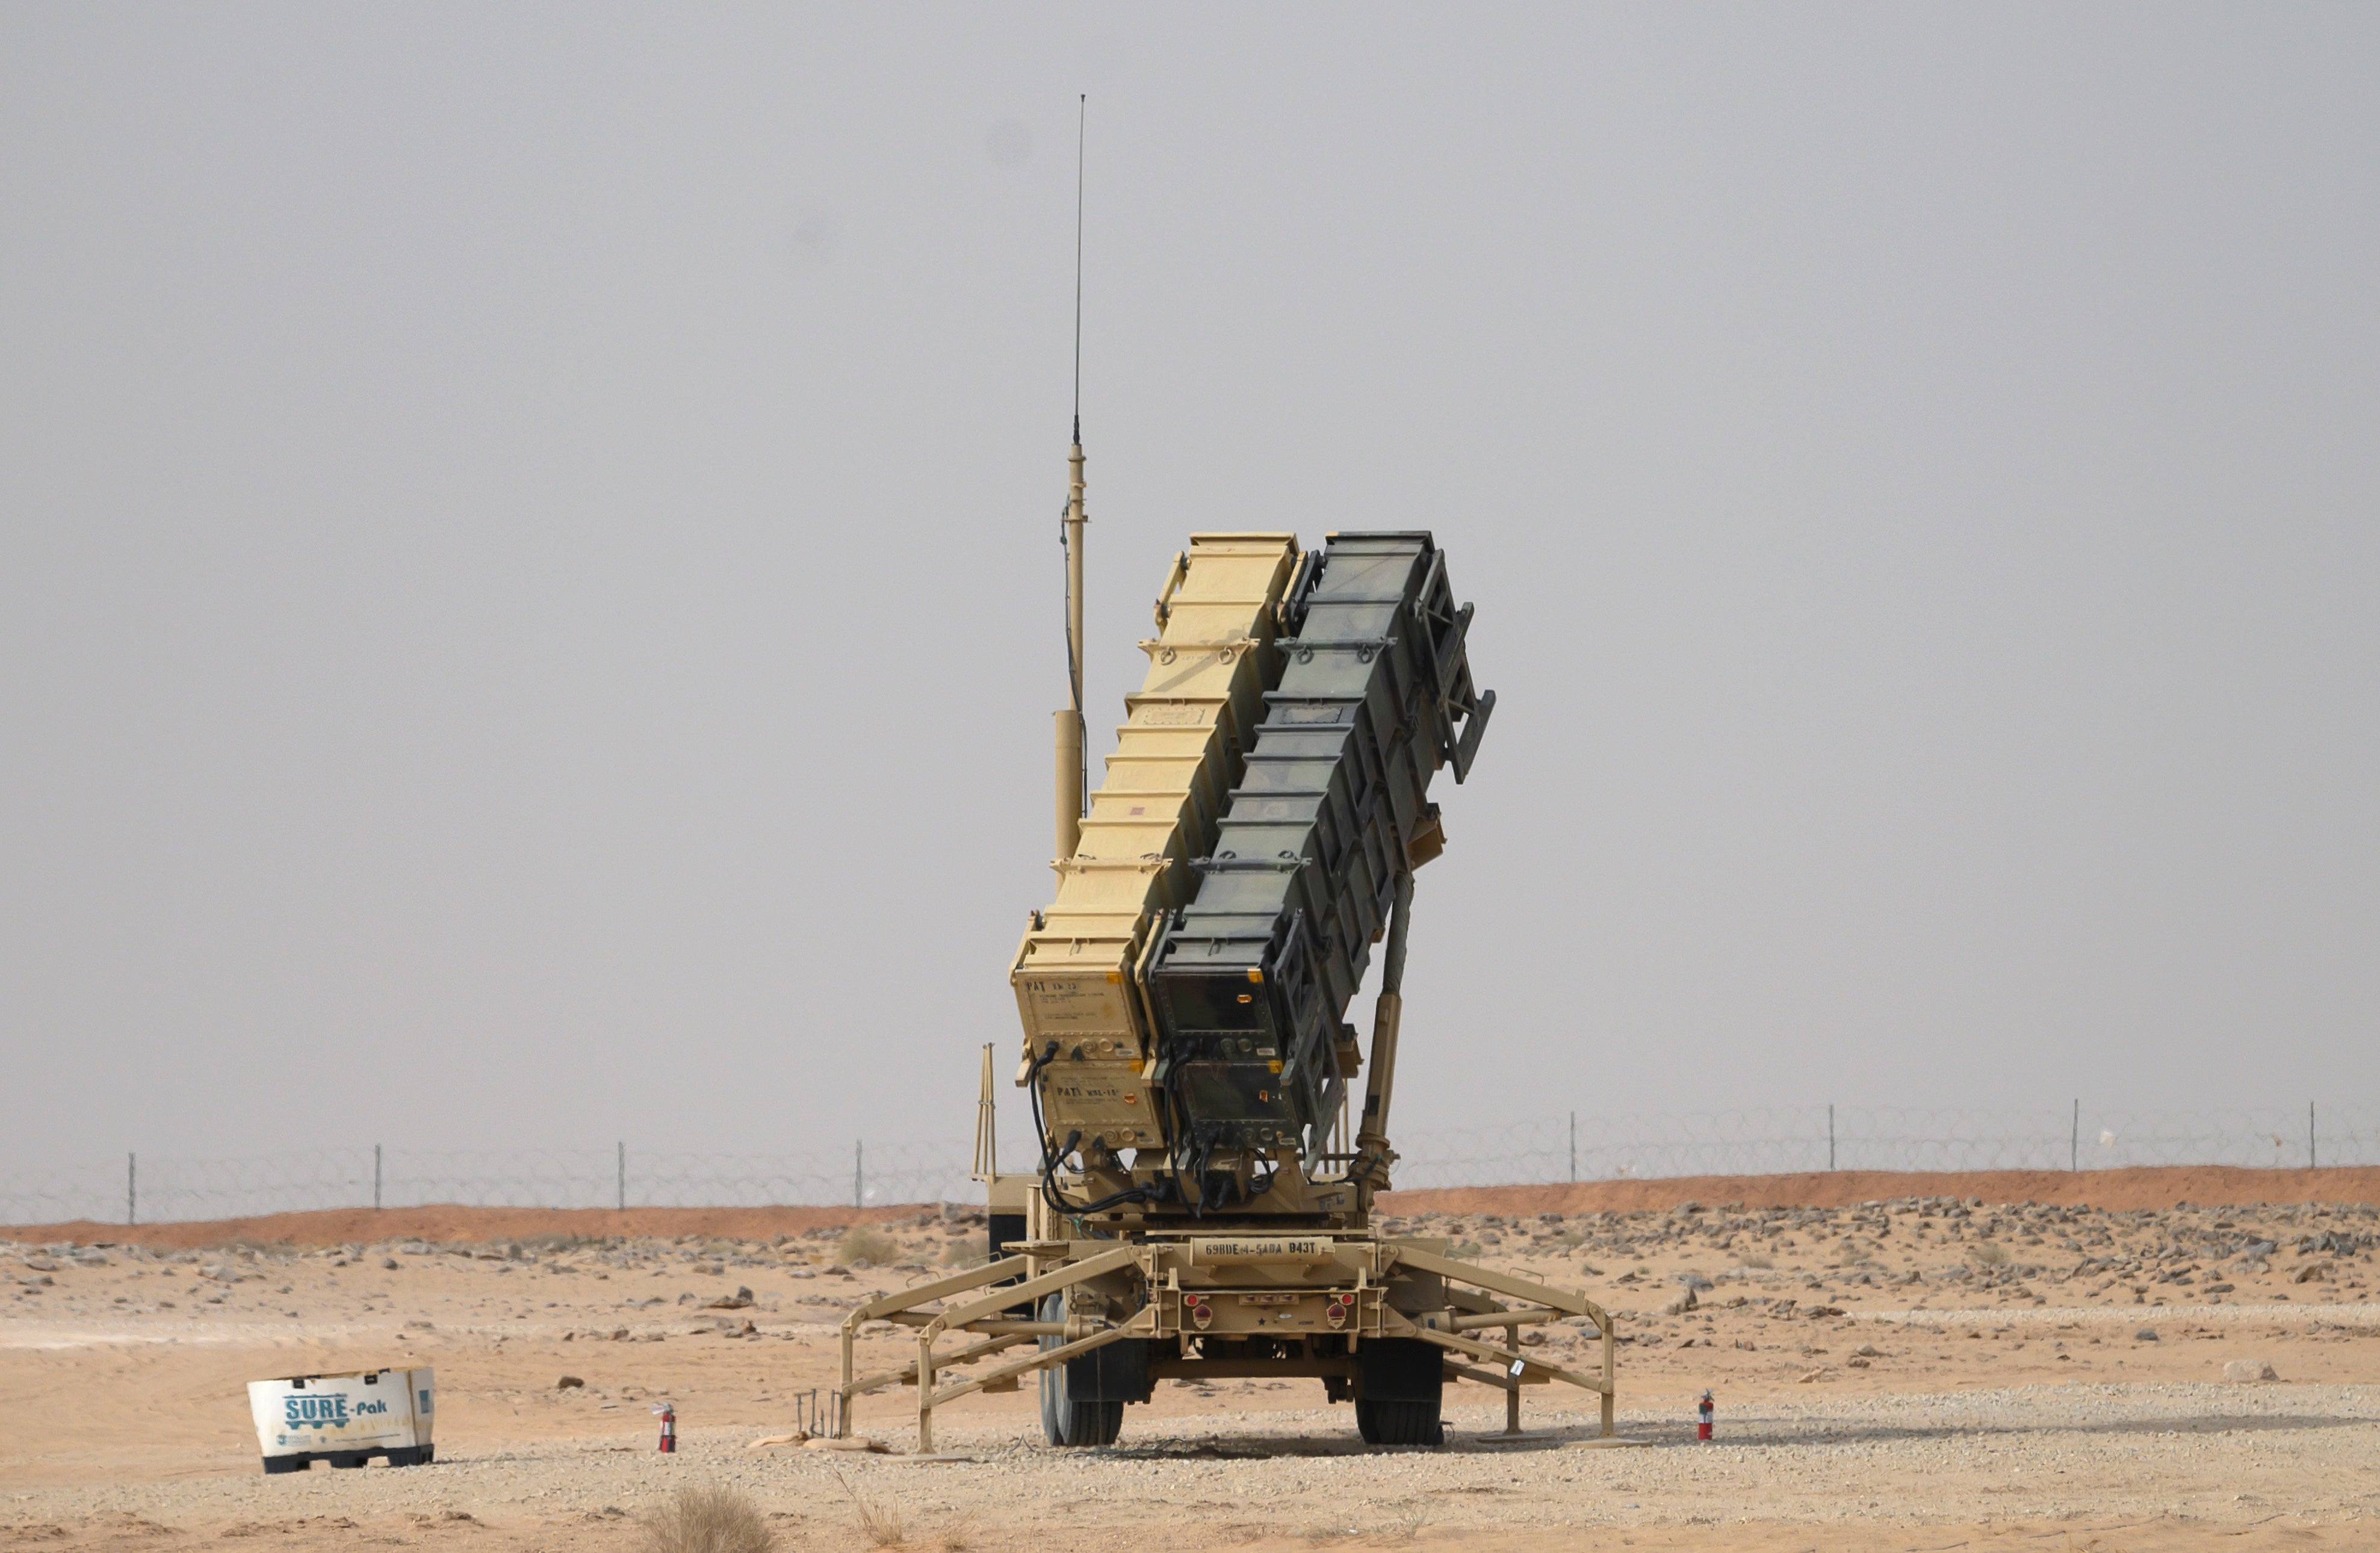 A US surface to air missile system near Prince Sultan airbase at al-Kharj, Saudi Arabia